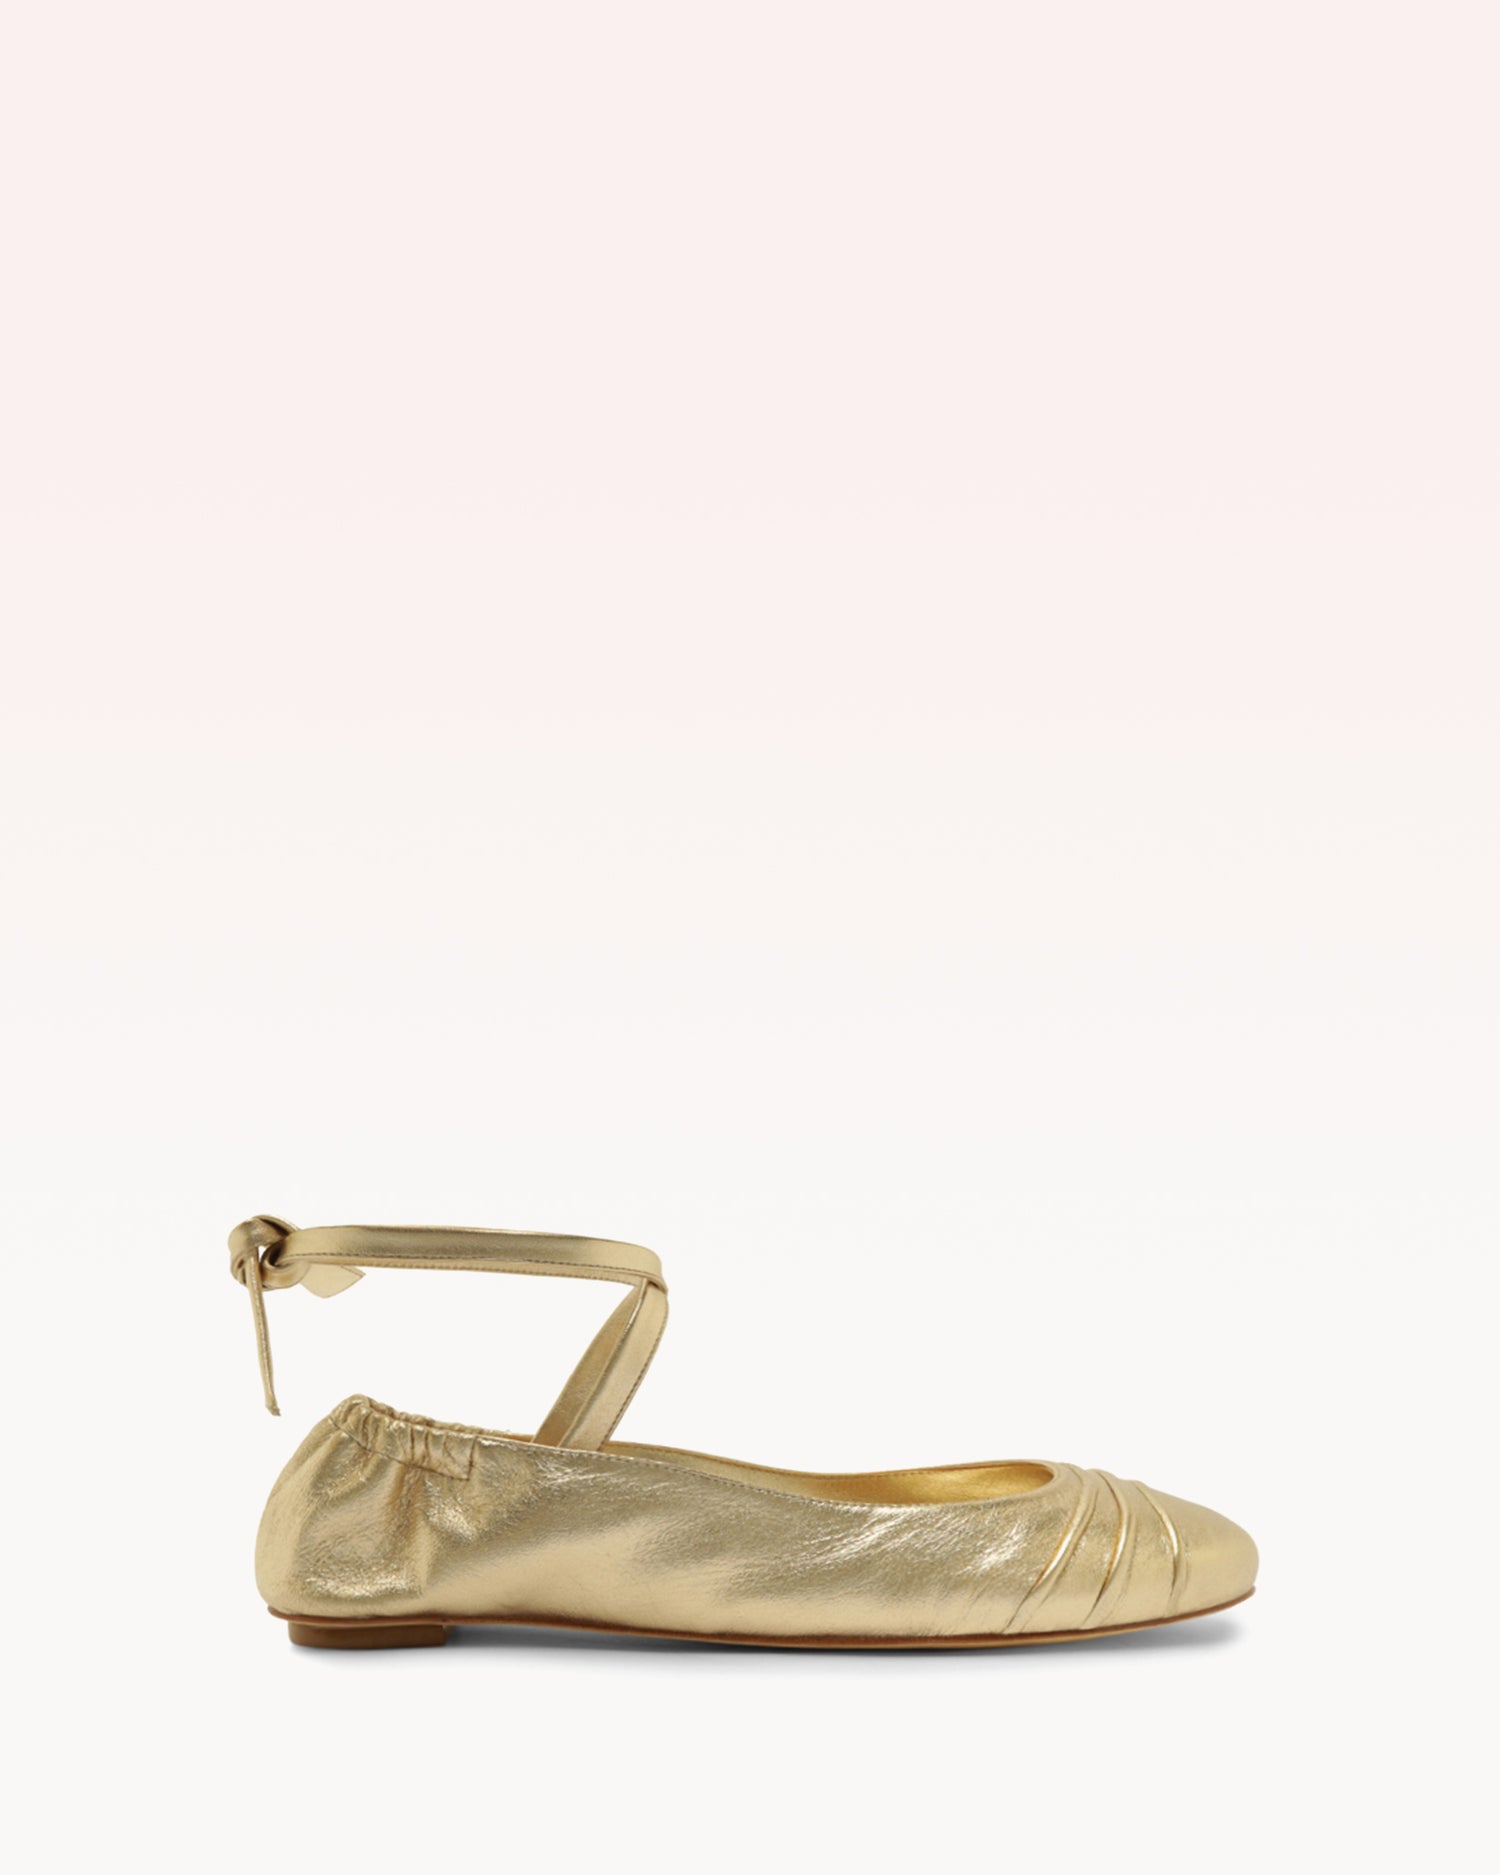 Clarita Ballet Flat Metallic Golden Sandals R/24 35 Gold Metallic Leather